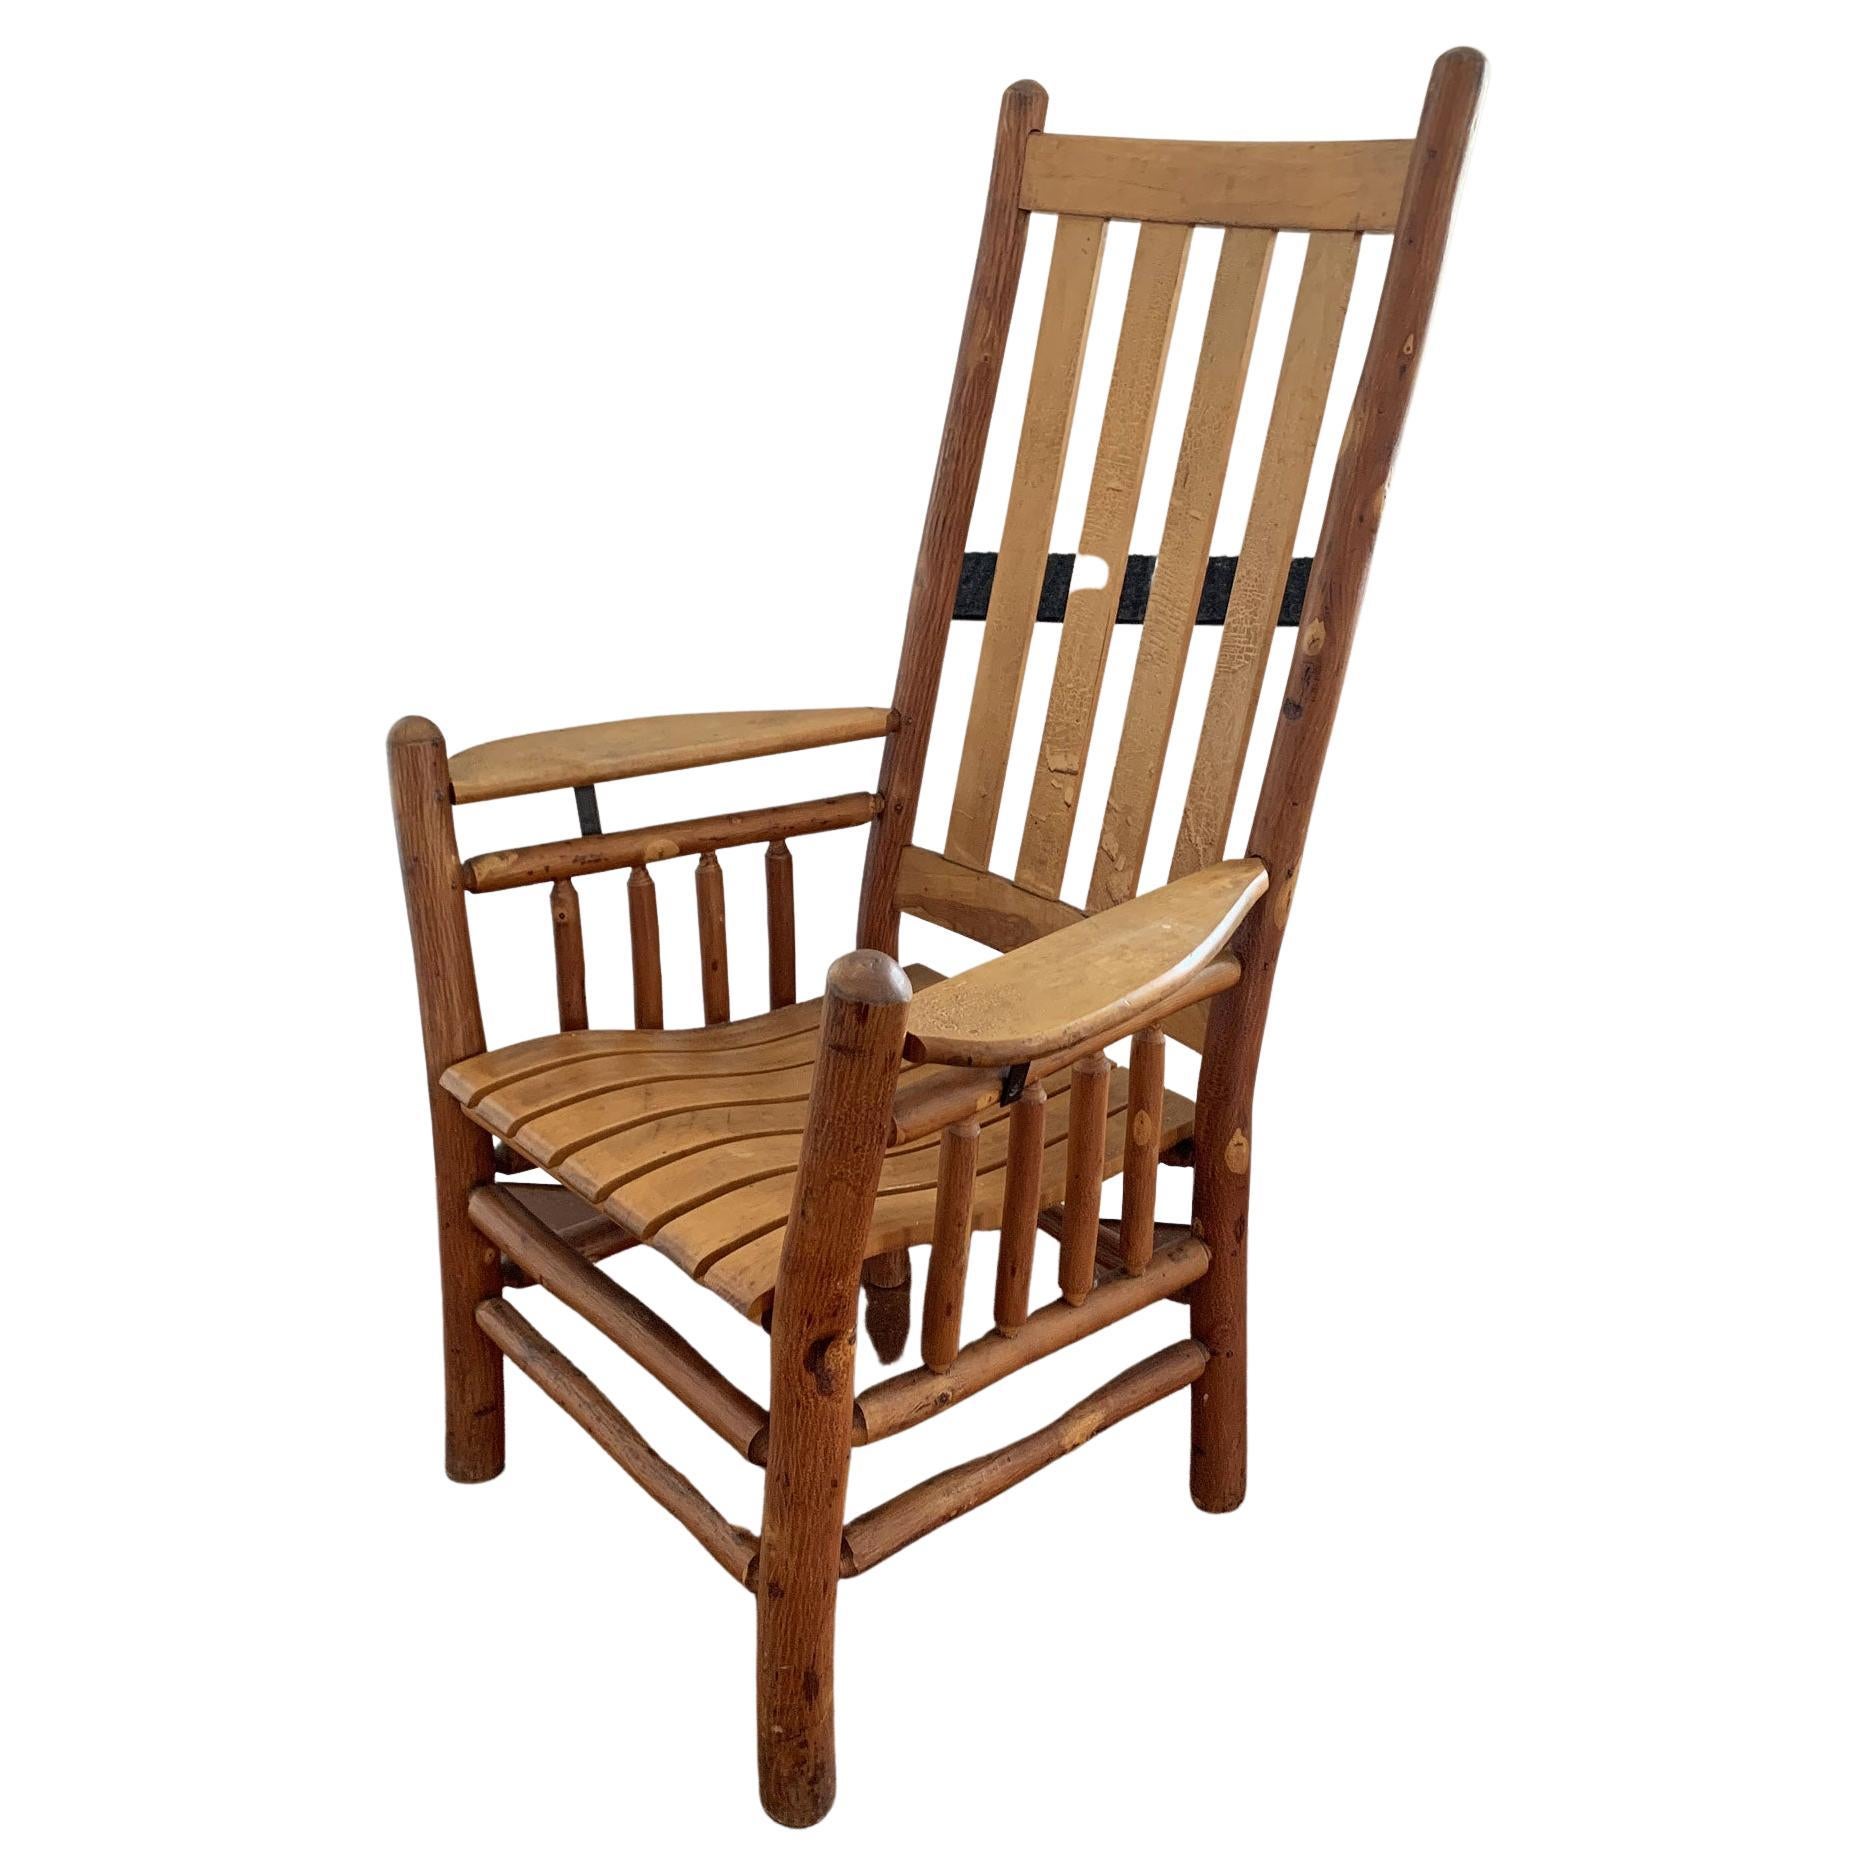 Old Hickory Paddle-Arm-Stuhl mit hoher Rückenlehne und Lattenrost